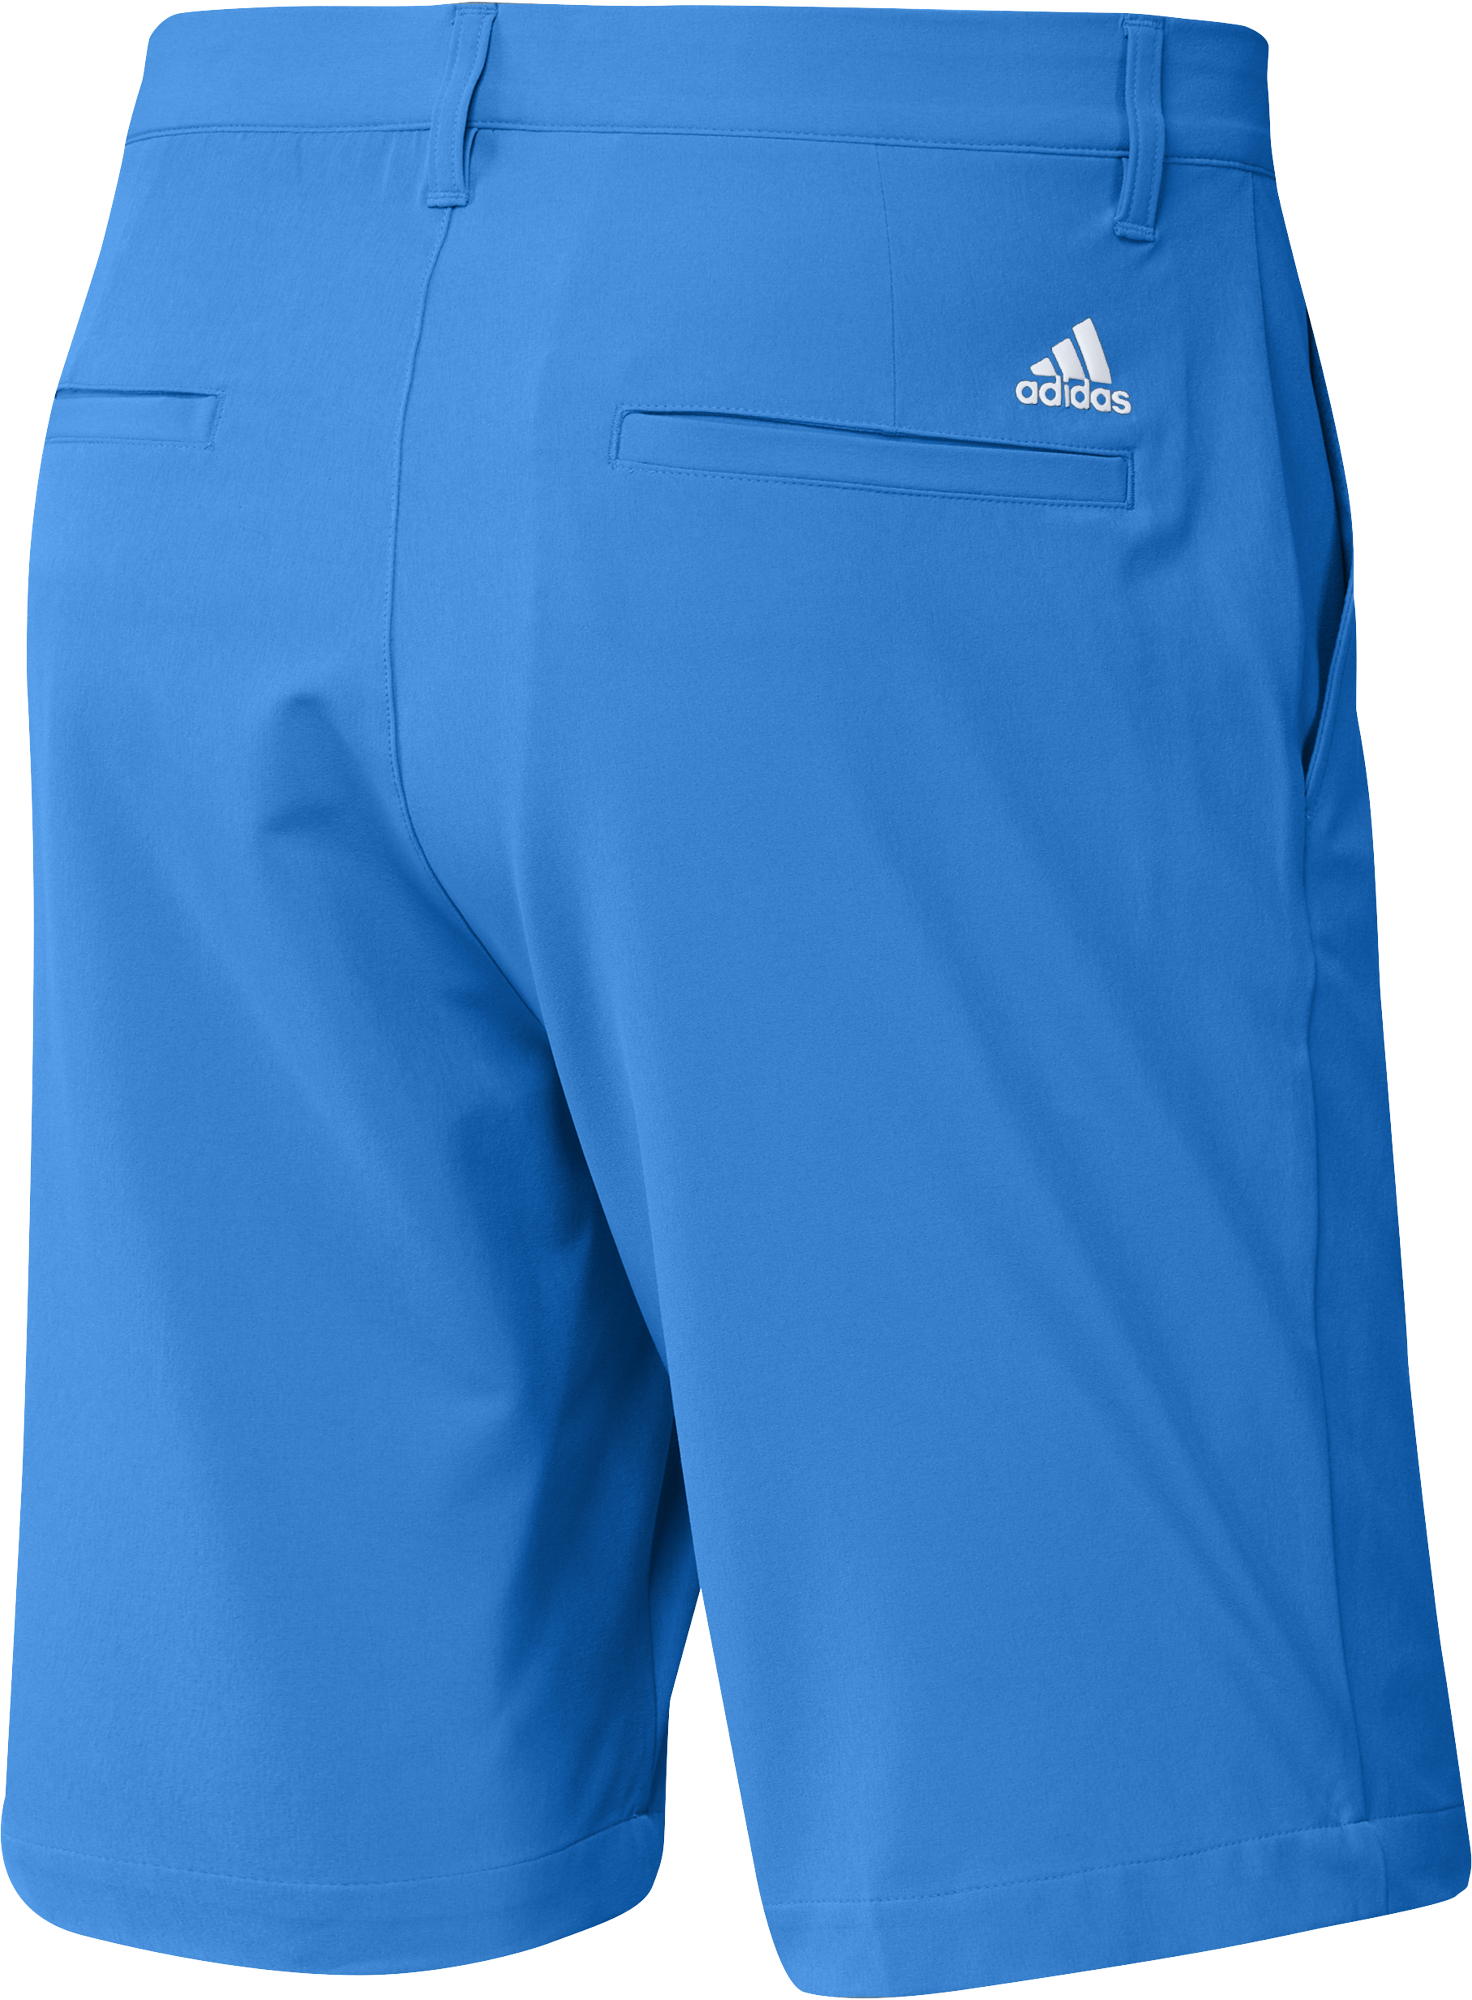 adidas Ultimate365 Core Short, blue